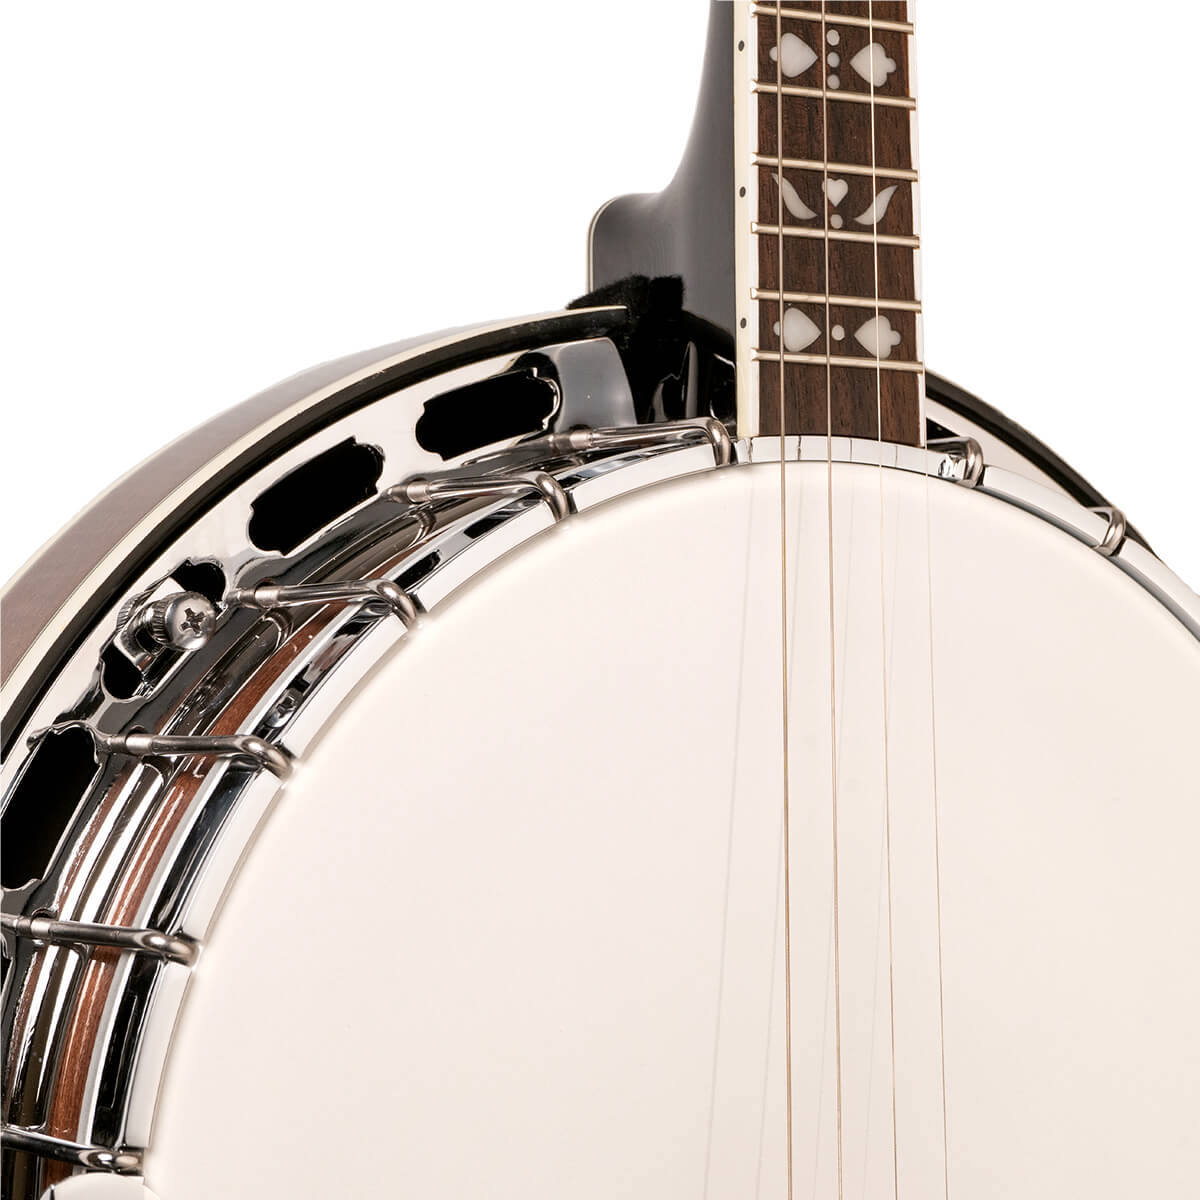 Gold Tone Tenor Special Banjo, TS-250 Banjos Gold Tone   